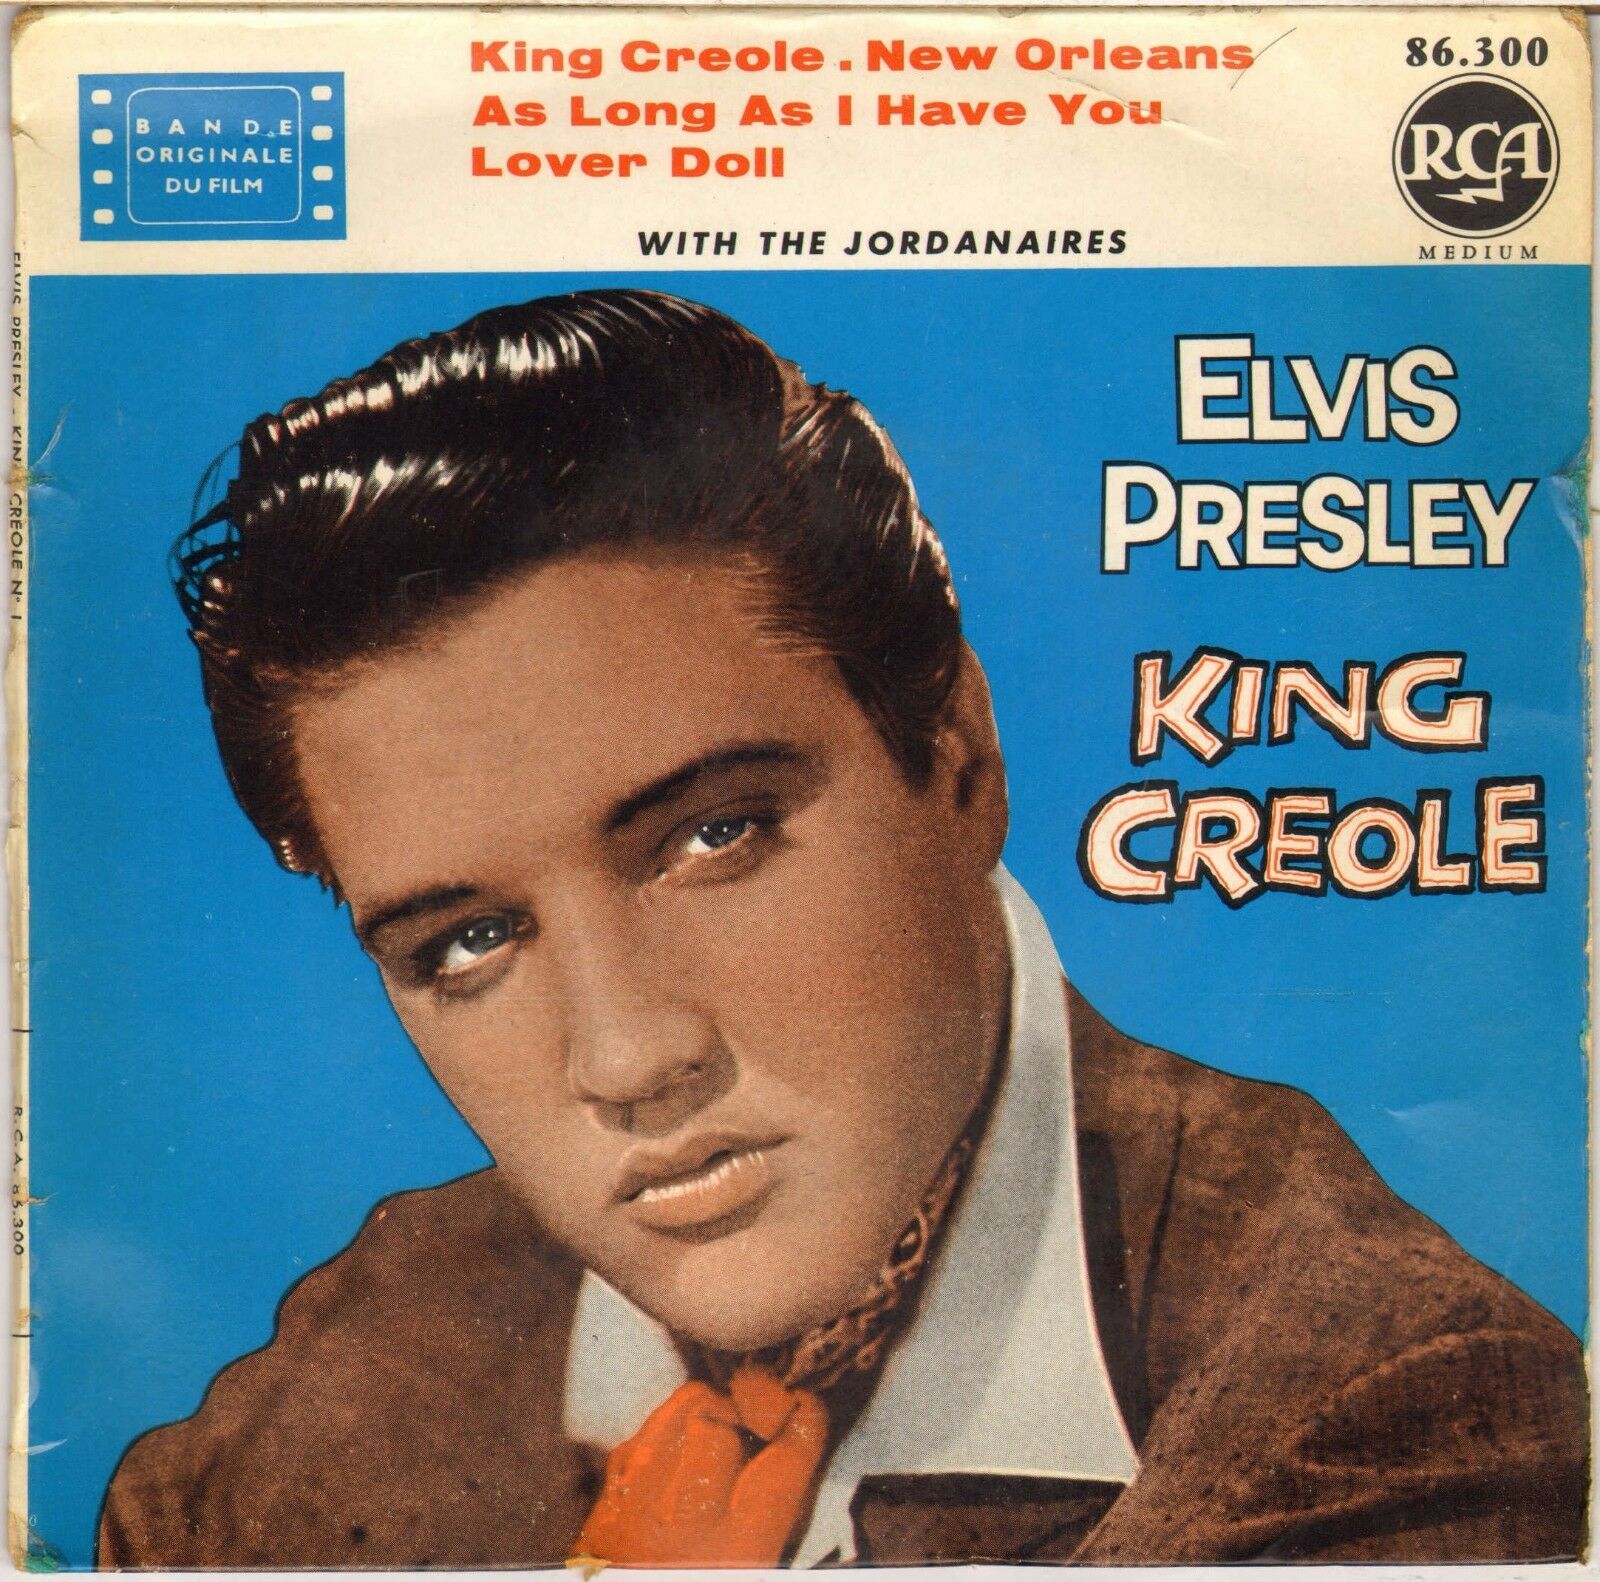 Elvis Presley LoverDoll picture record-